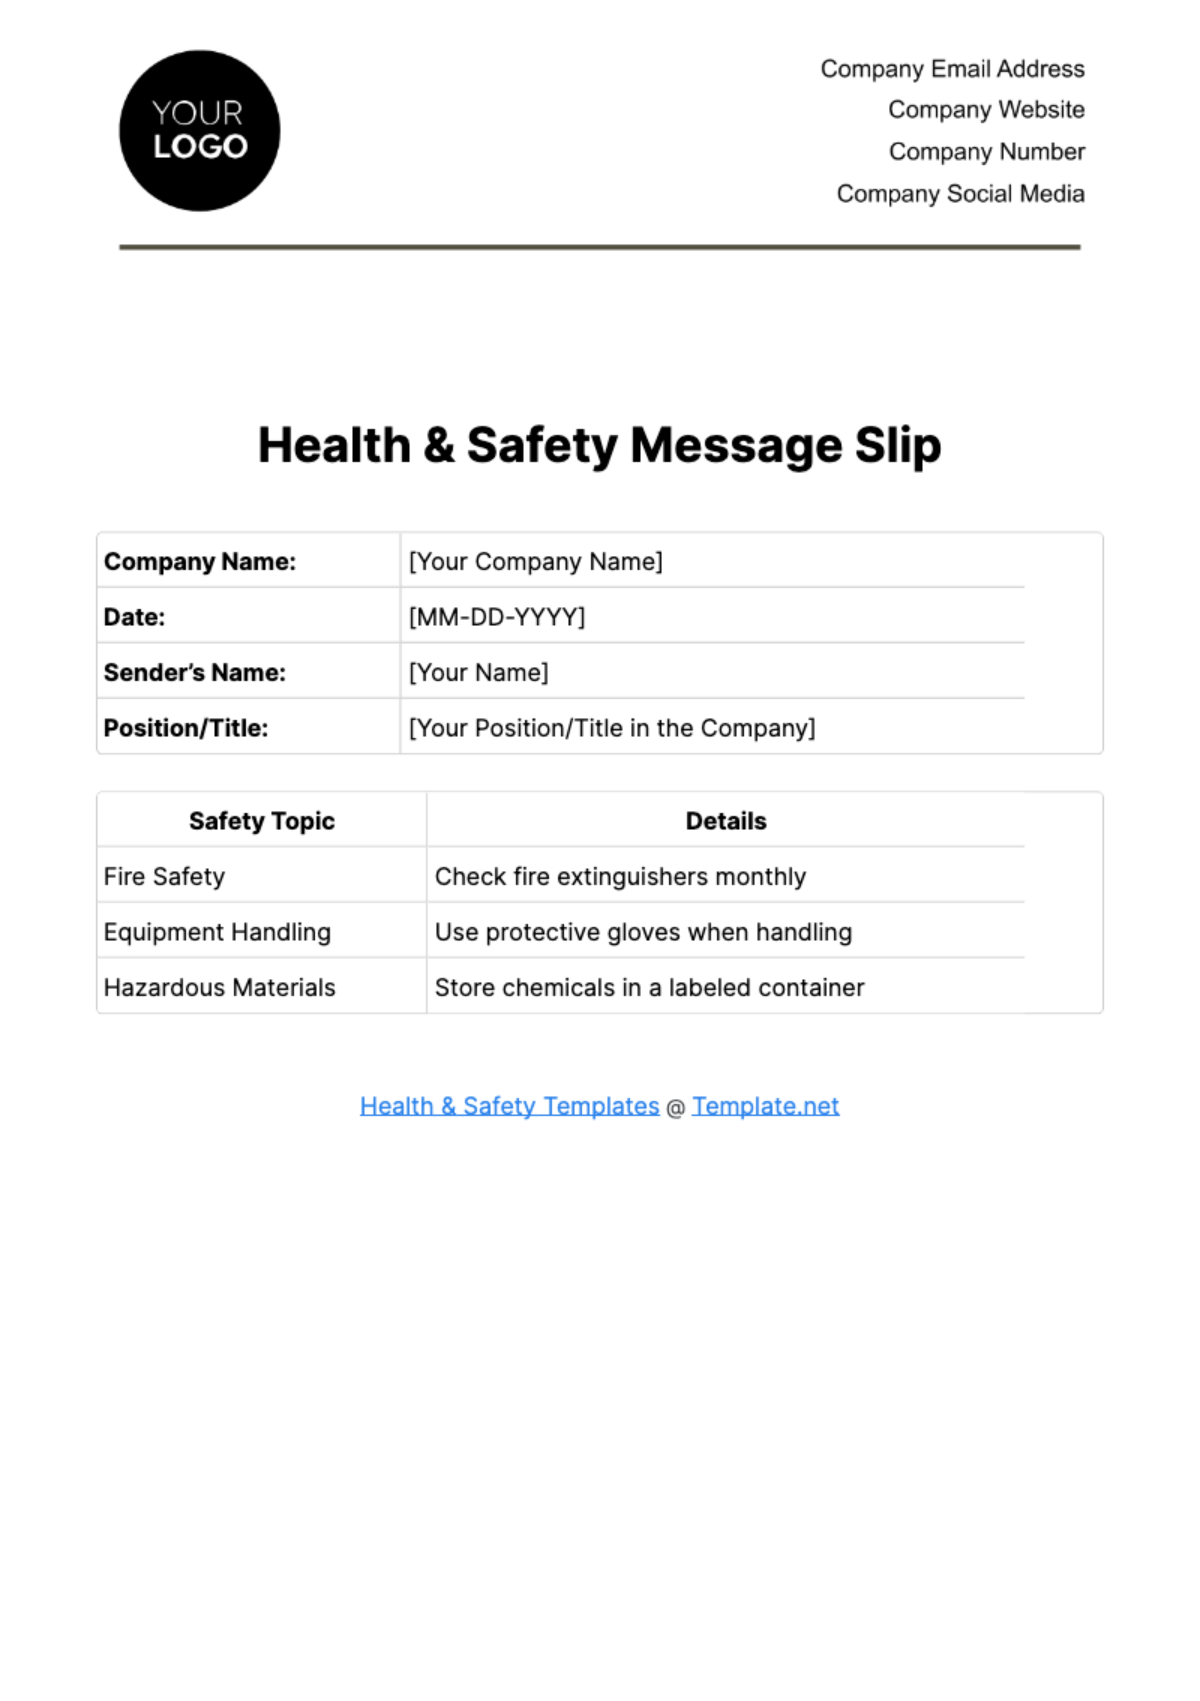 Health & Safety Message Slip Template